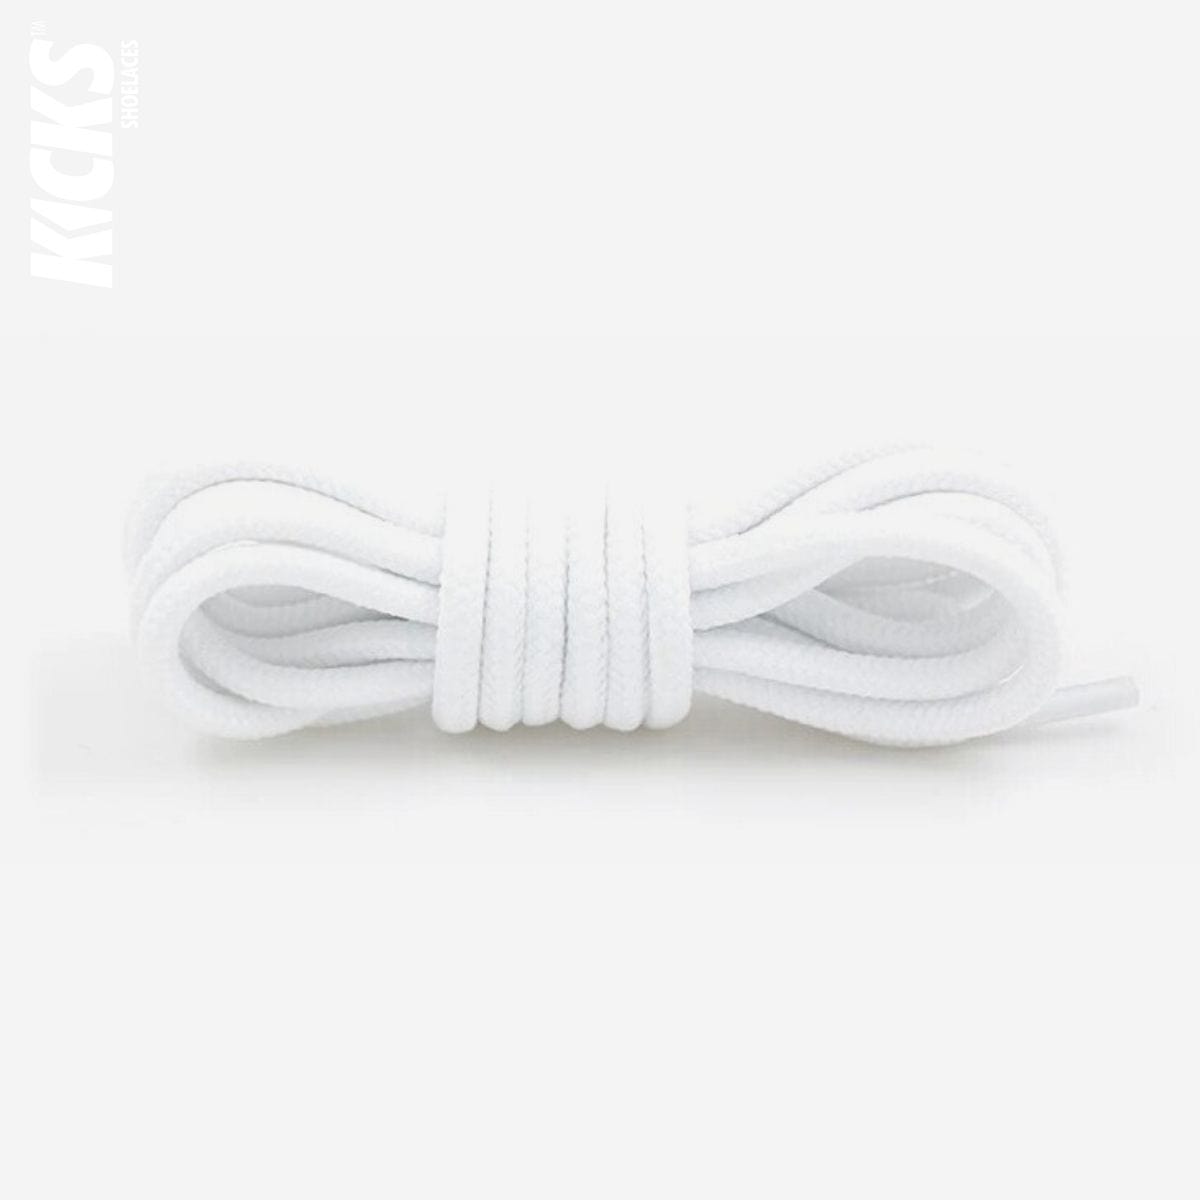 Nike Air Max 720 Replacement Shoelaces - Kicks Shoelaces